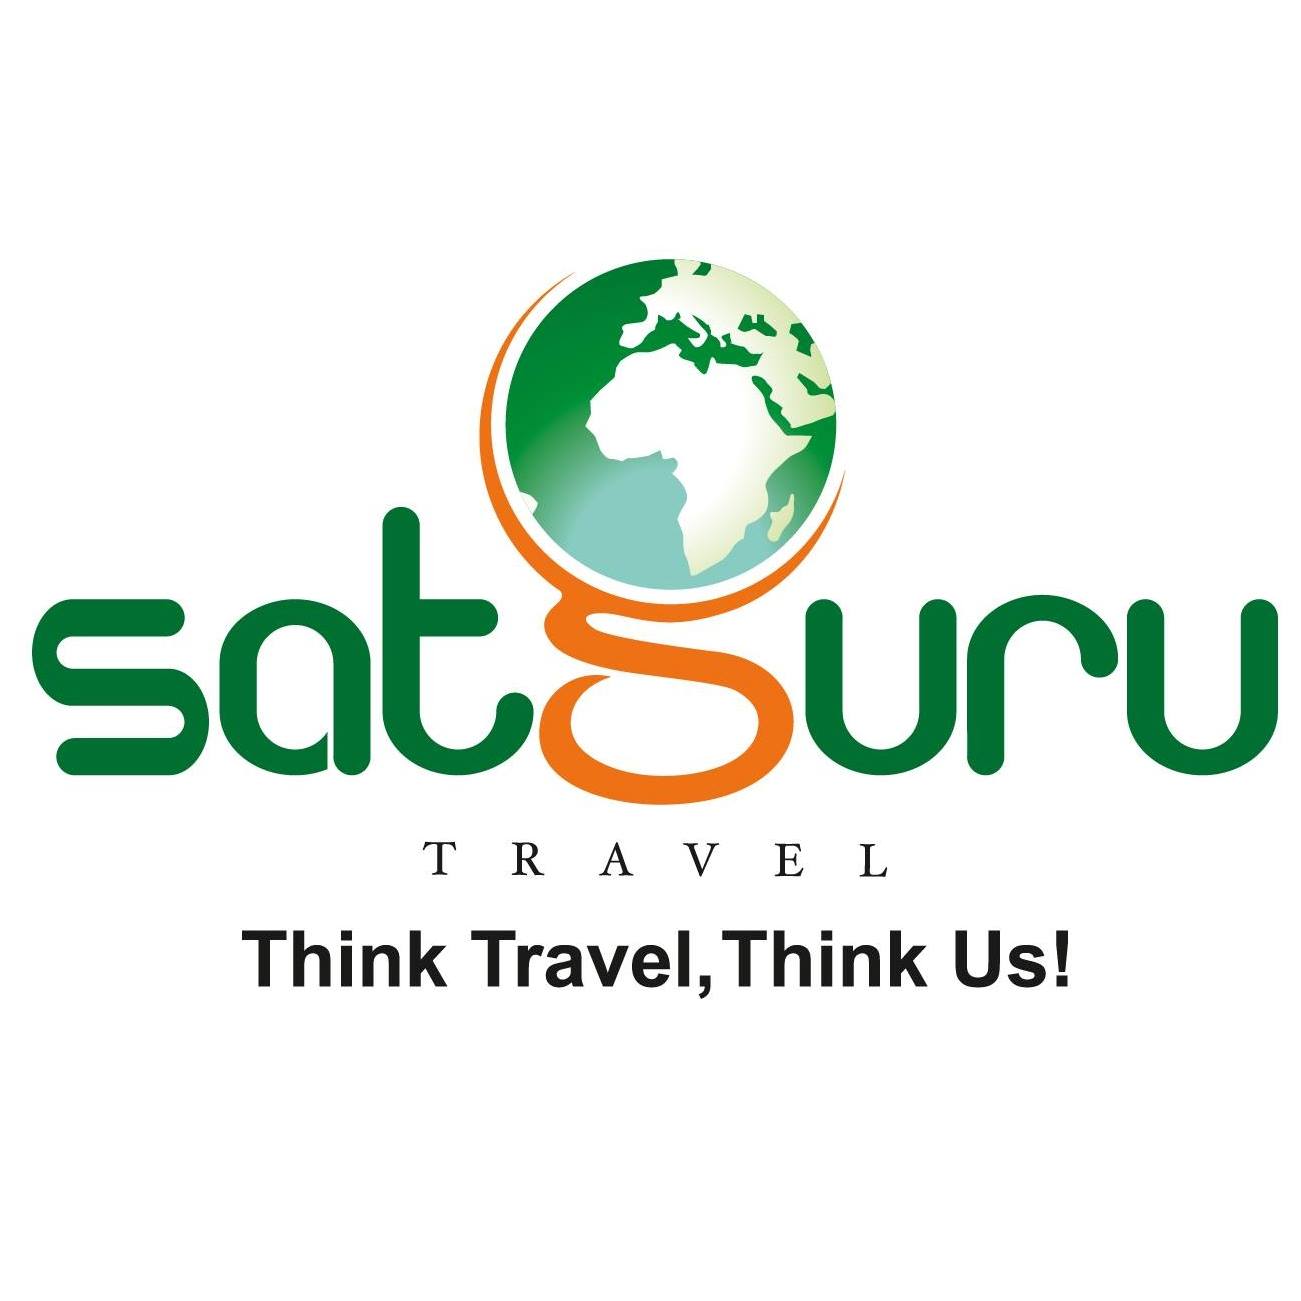 Satguru Travels